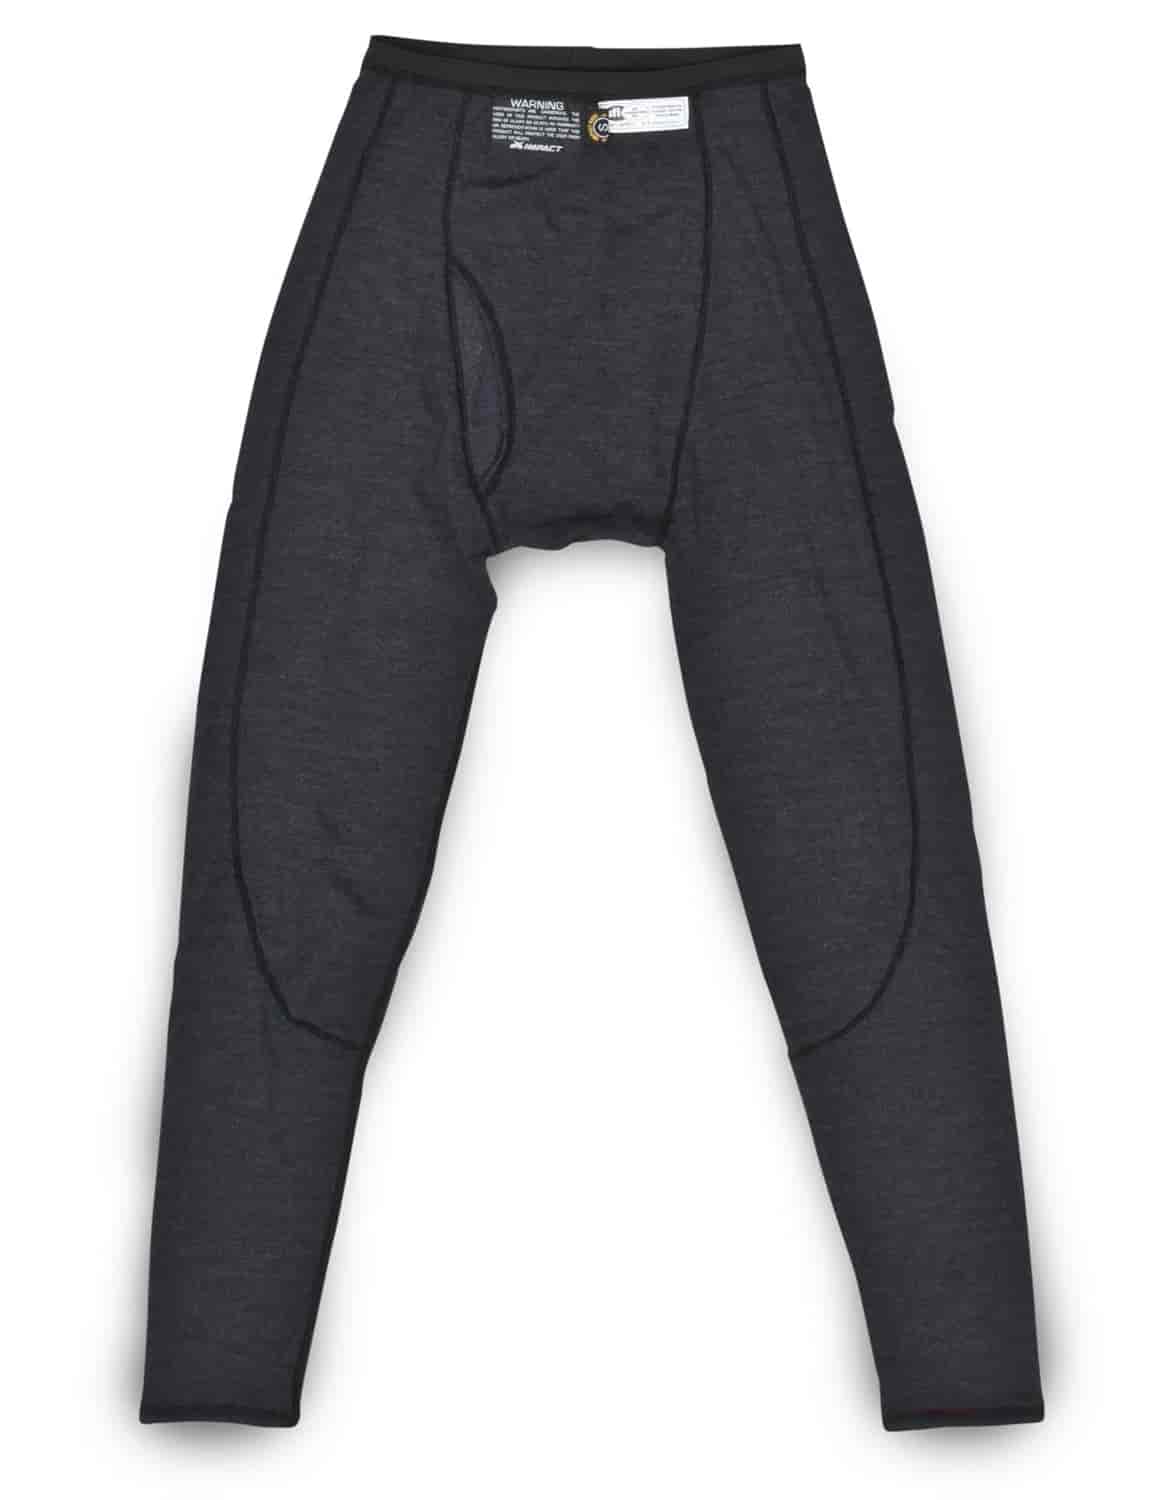 ImpactMax II Underwear Pants, 3X-Large, Grey